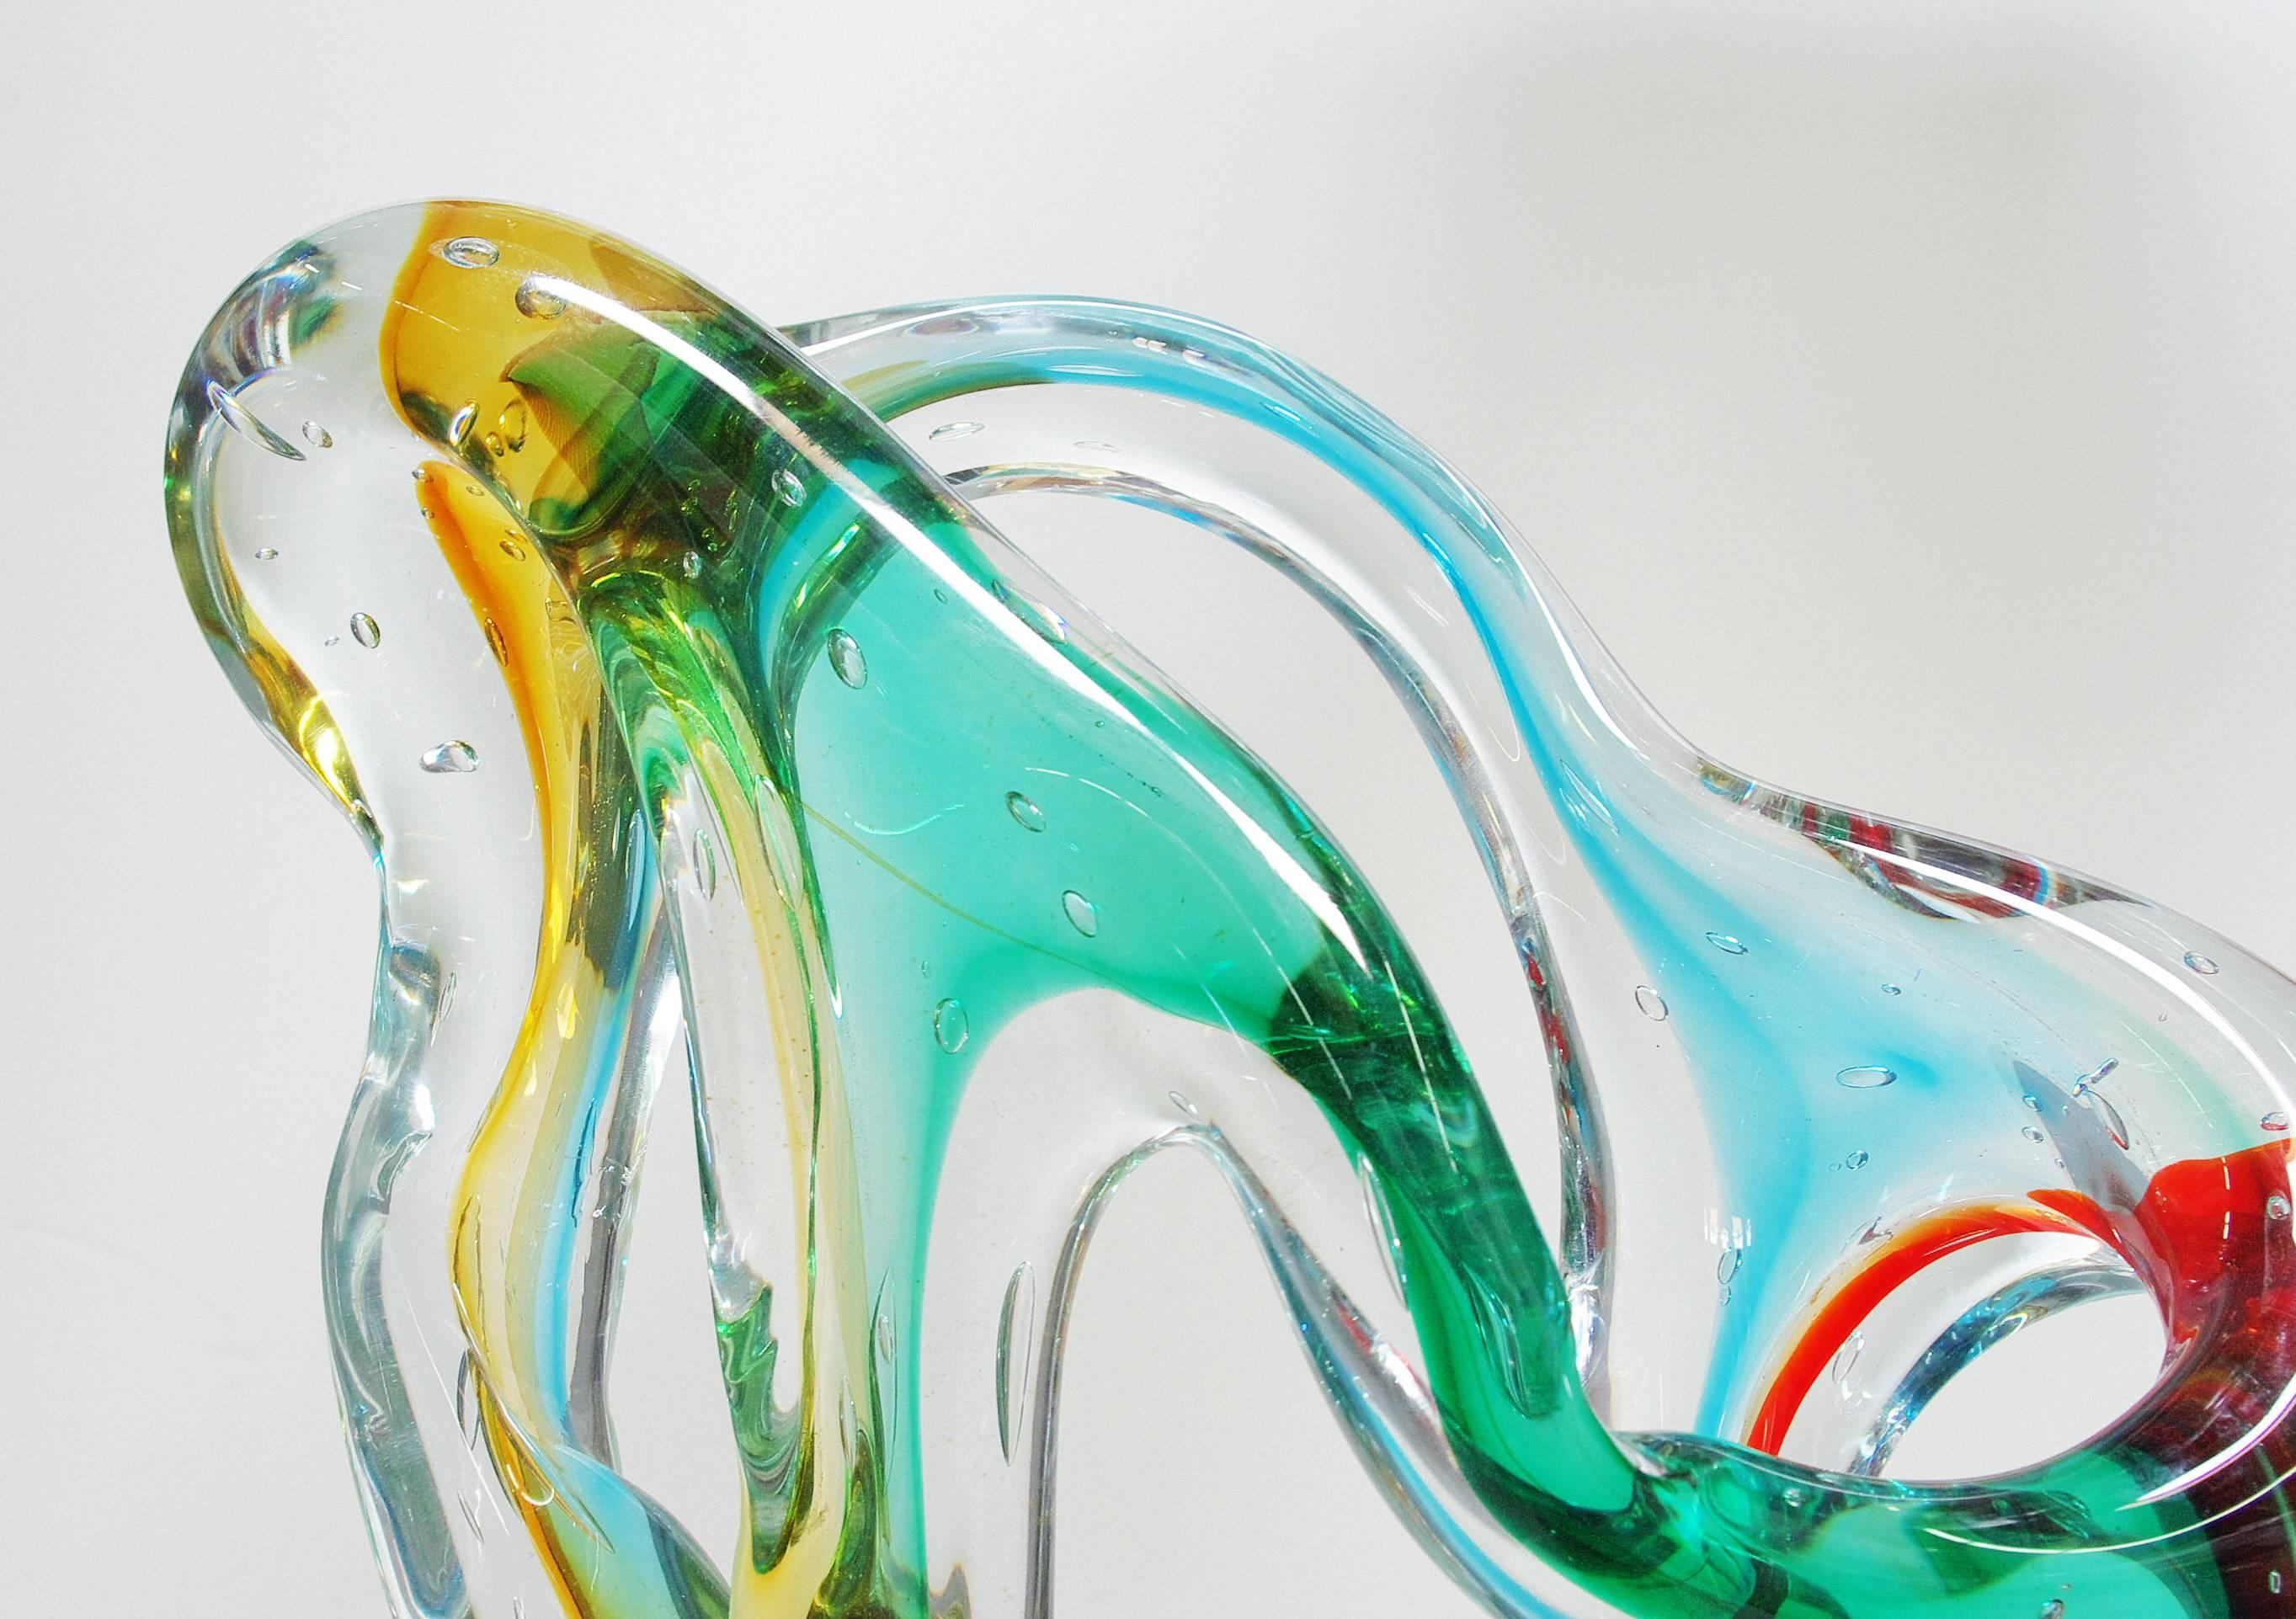 Abstract multi-color Murano glass sculpture by Sergio Constantini
Signed 